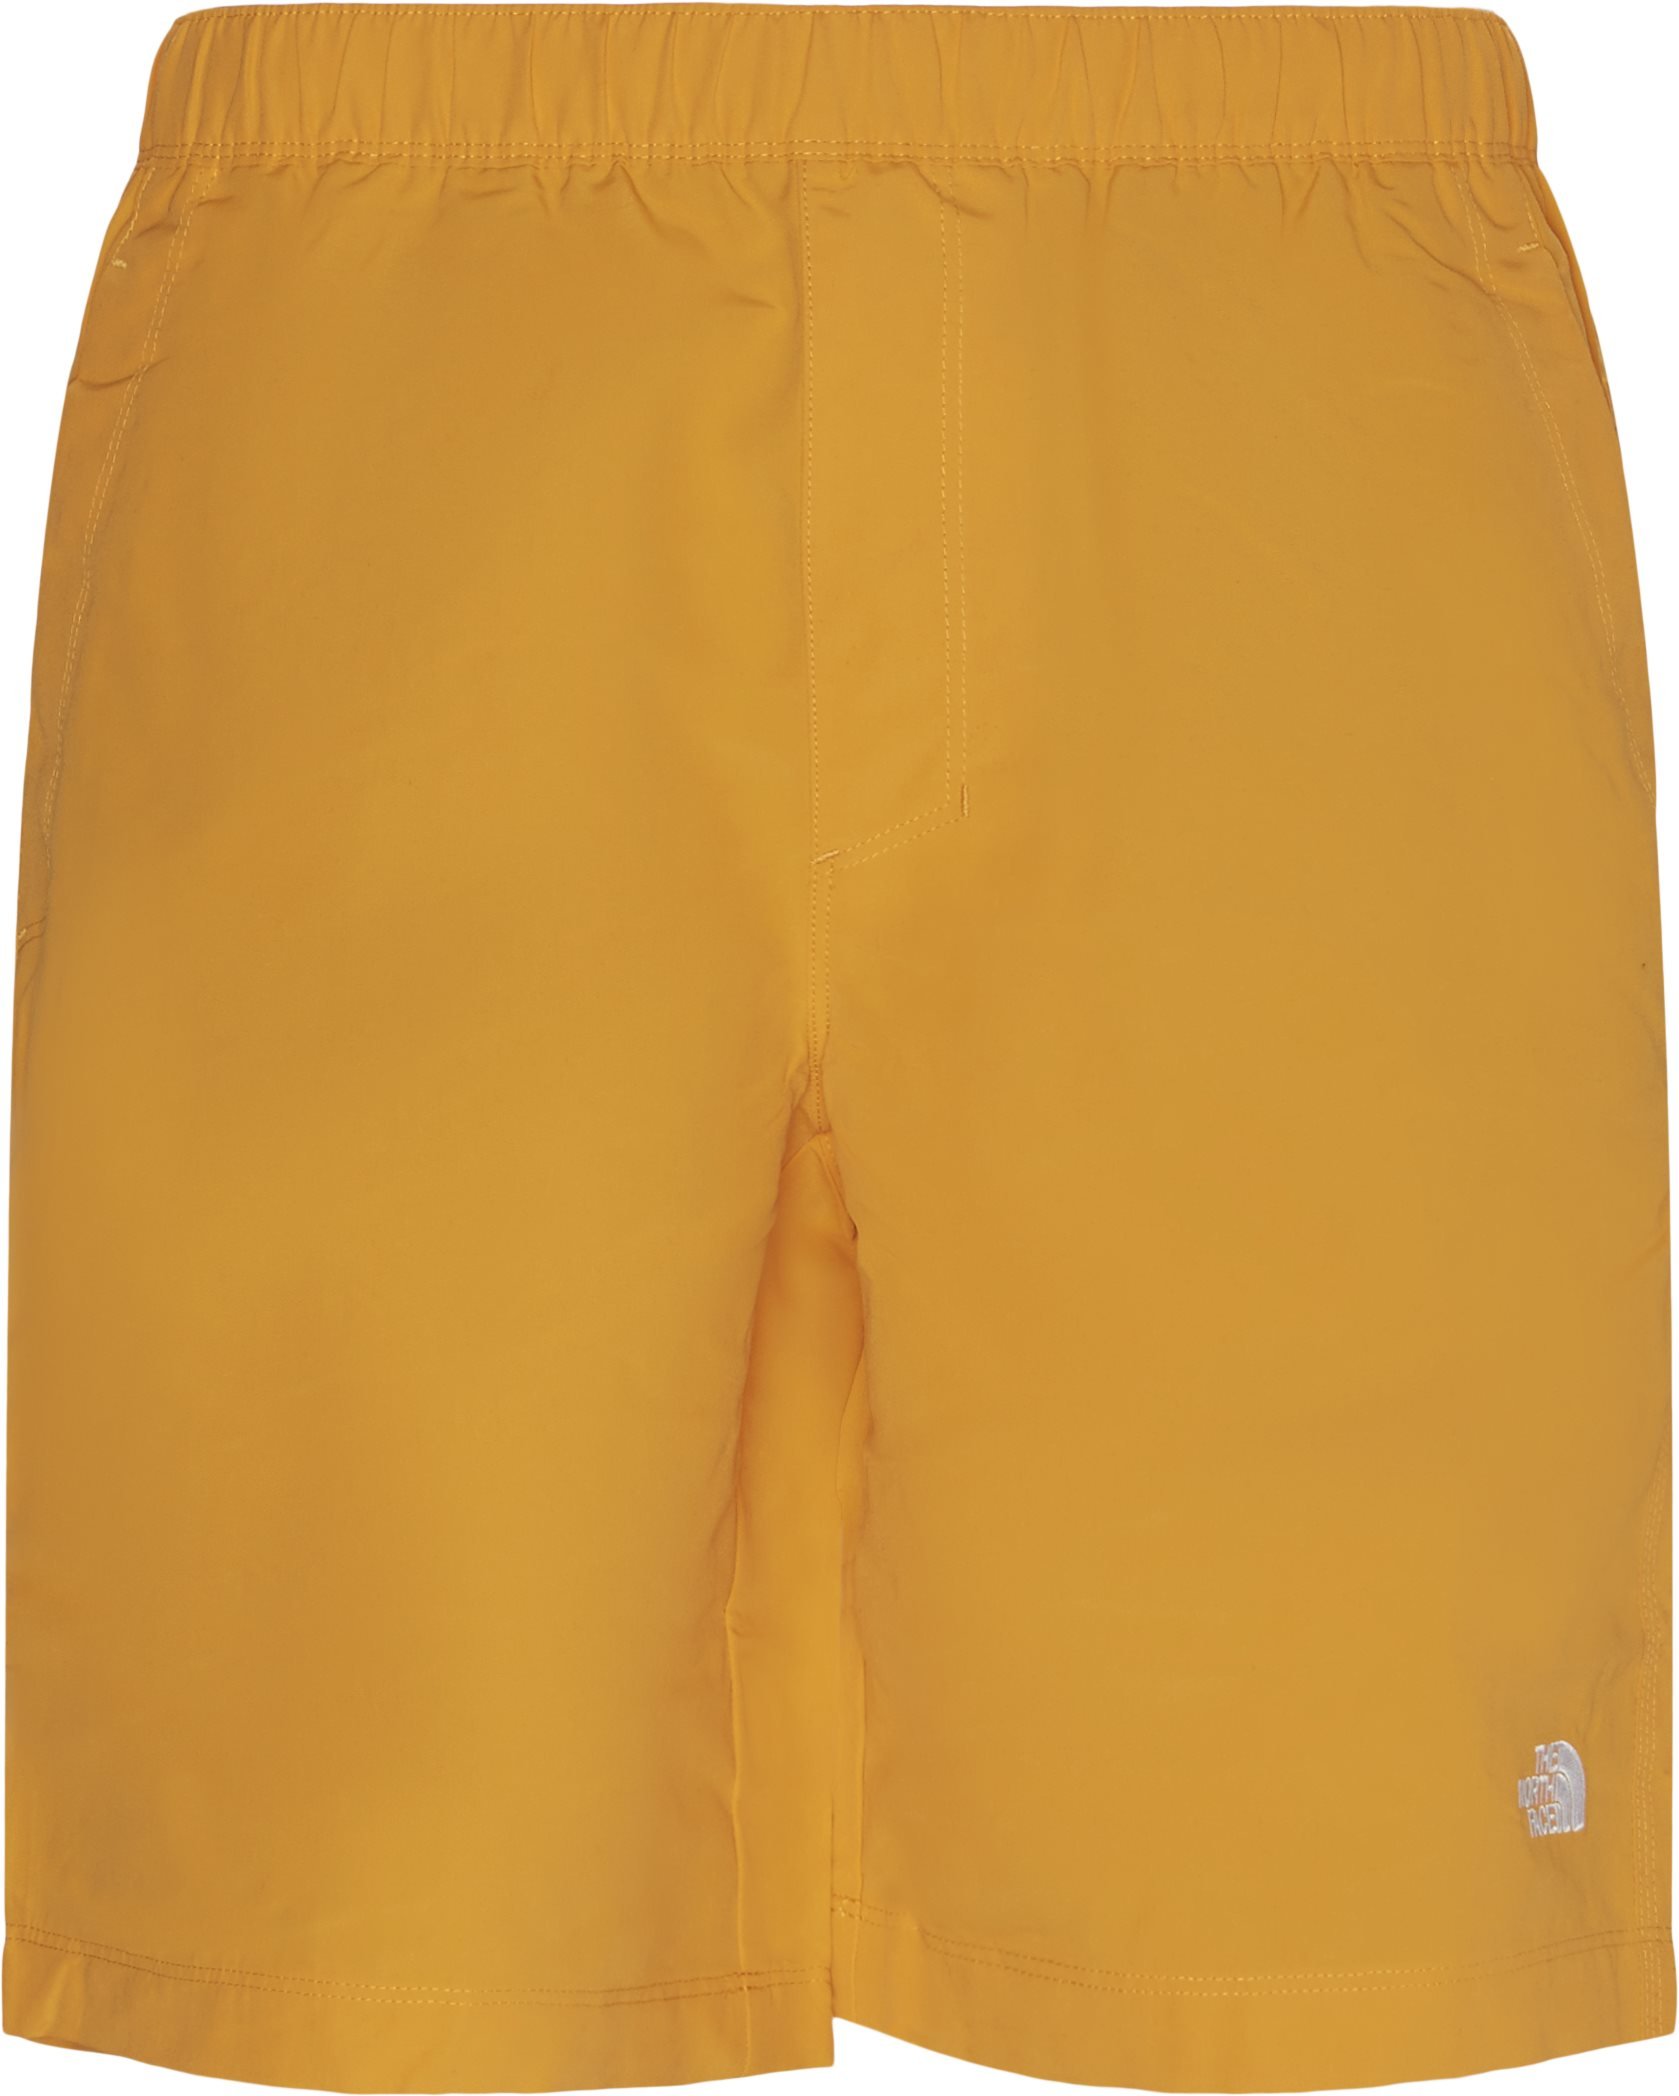 The North Face Shorts CLASS V RAPIDS SHORTS Orange